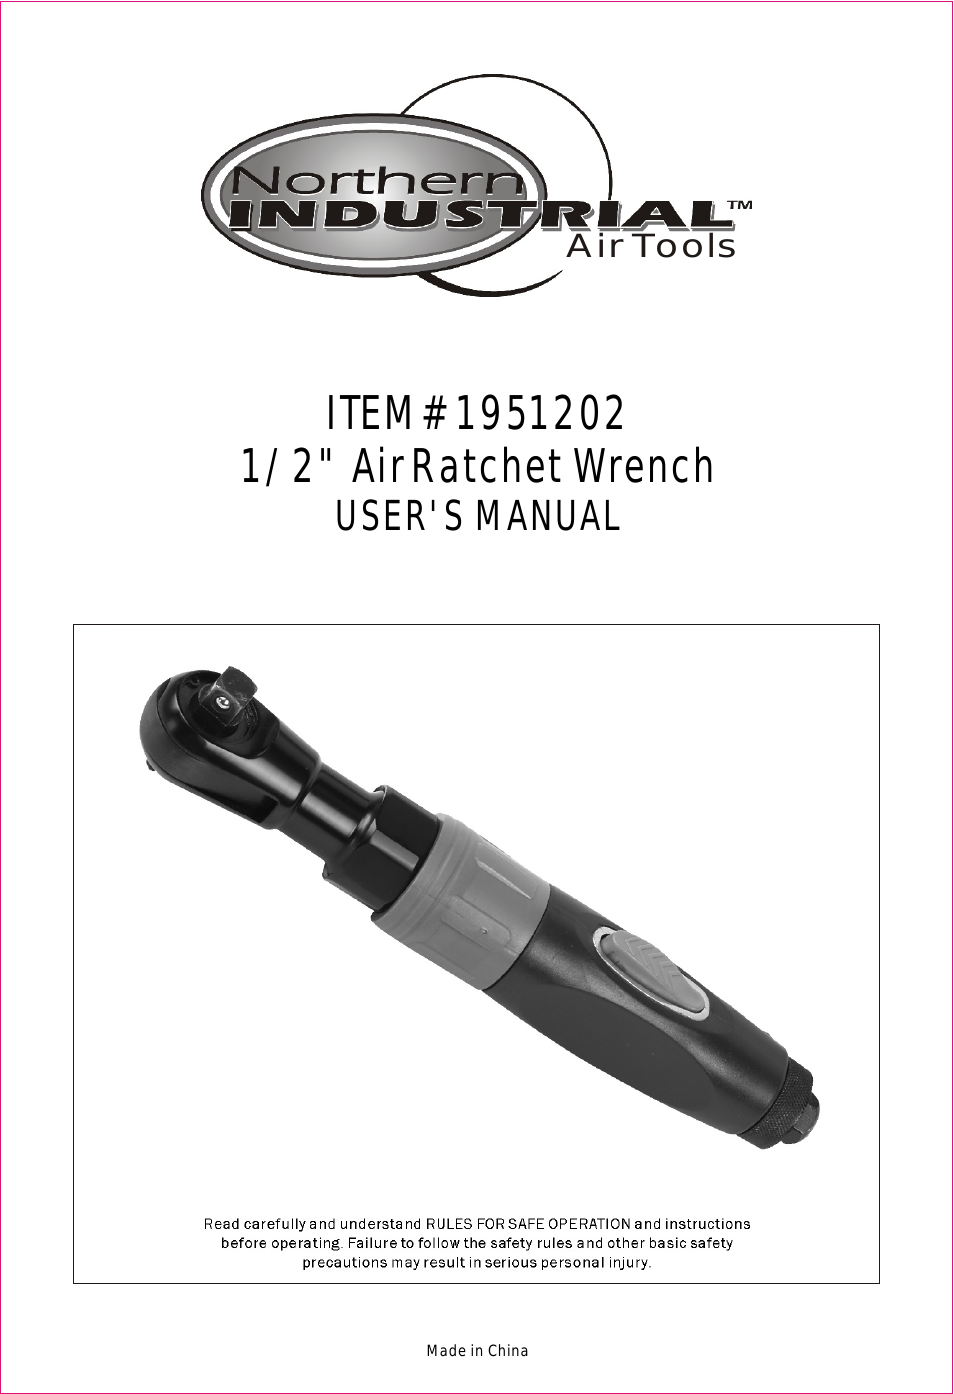 1/2" AirRatchet Wrench